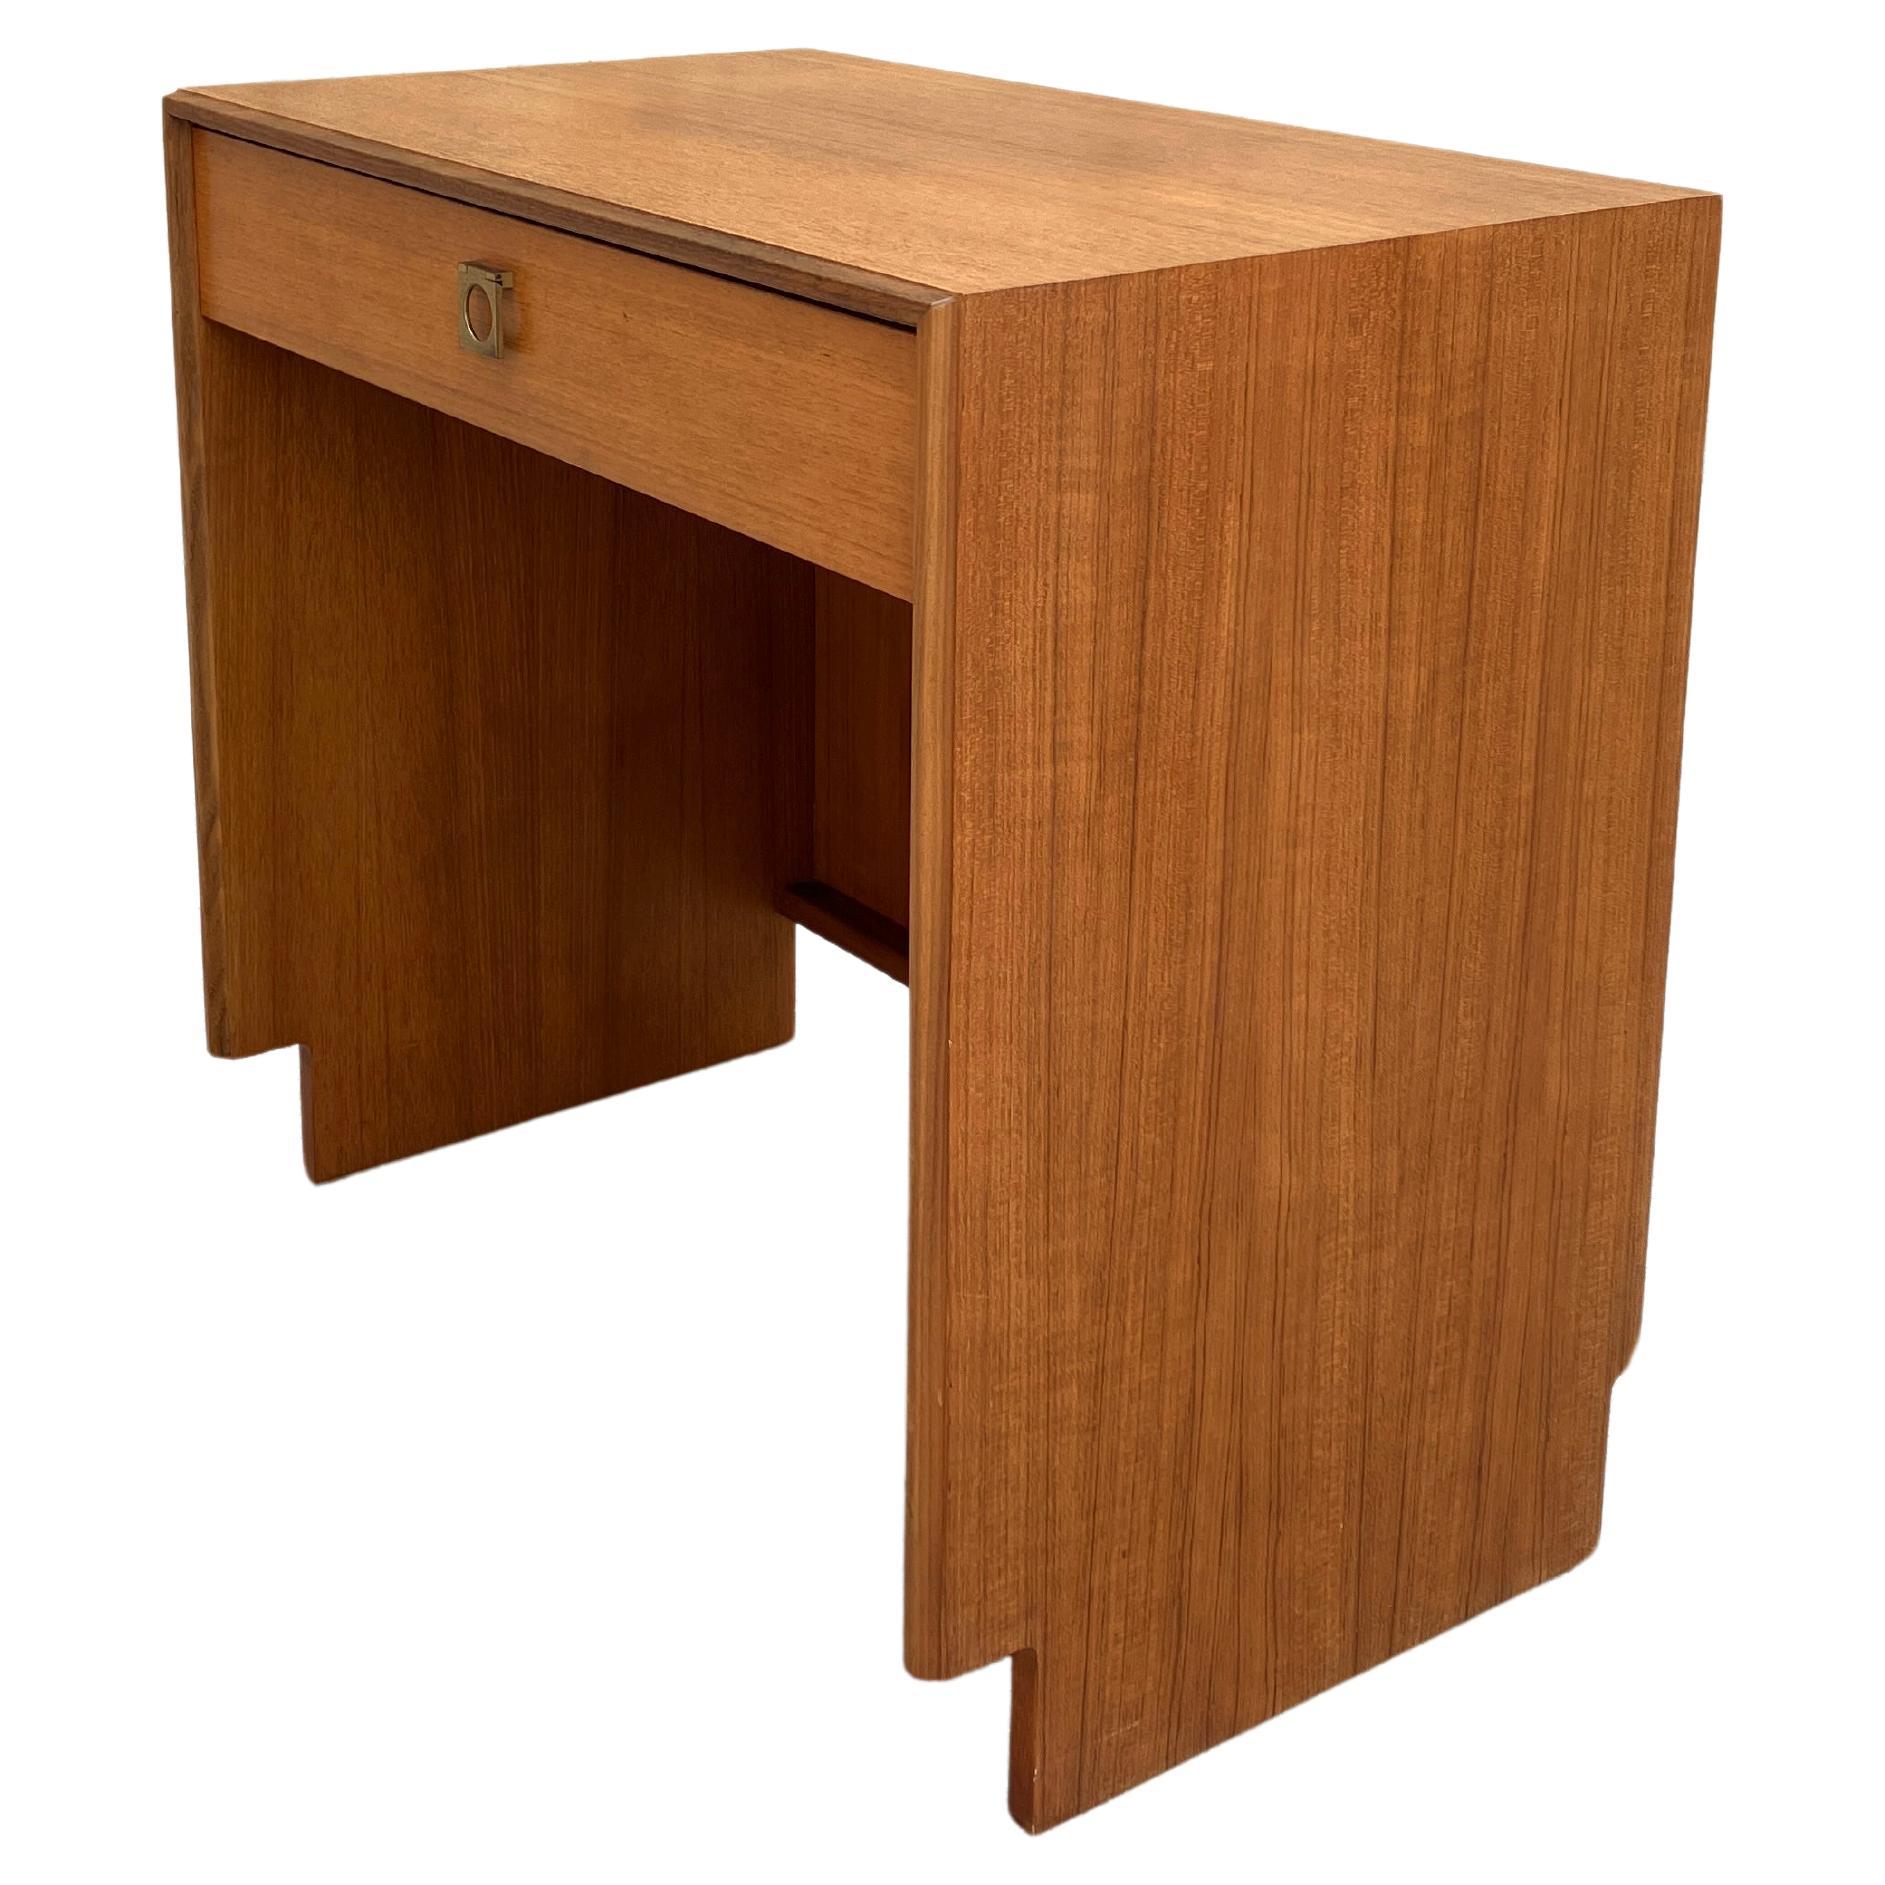 Minimal mid century desk / dressing table in Teak by G Plan Danish style